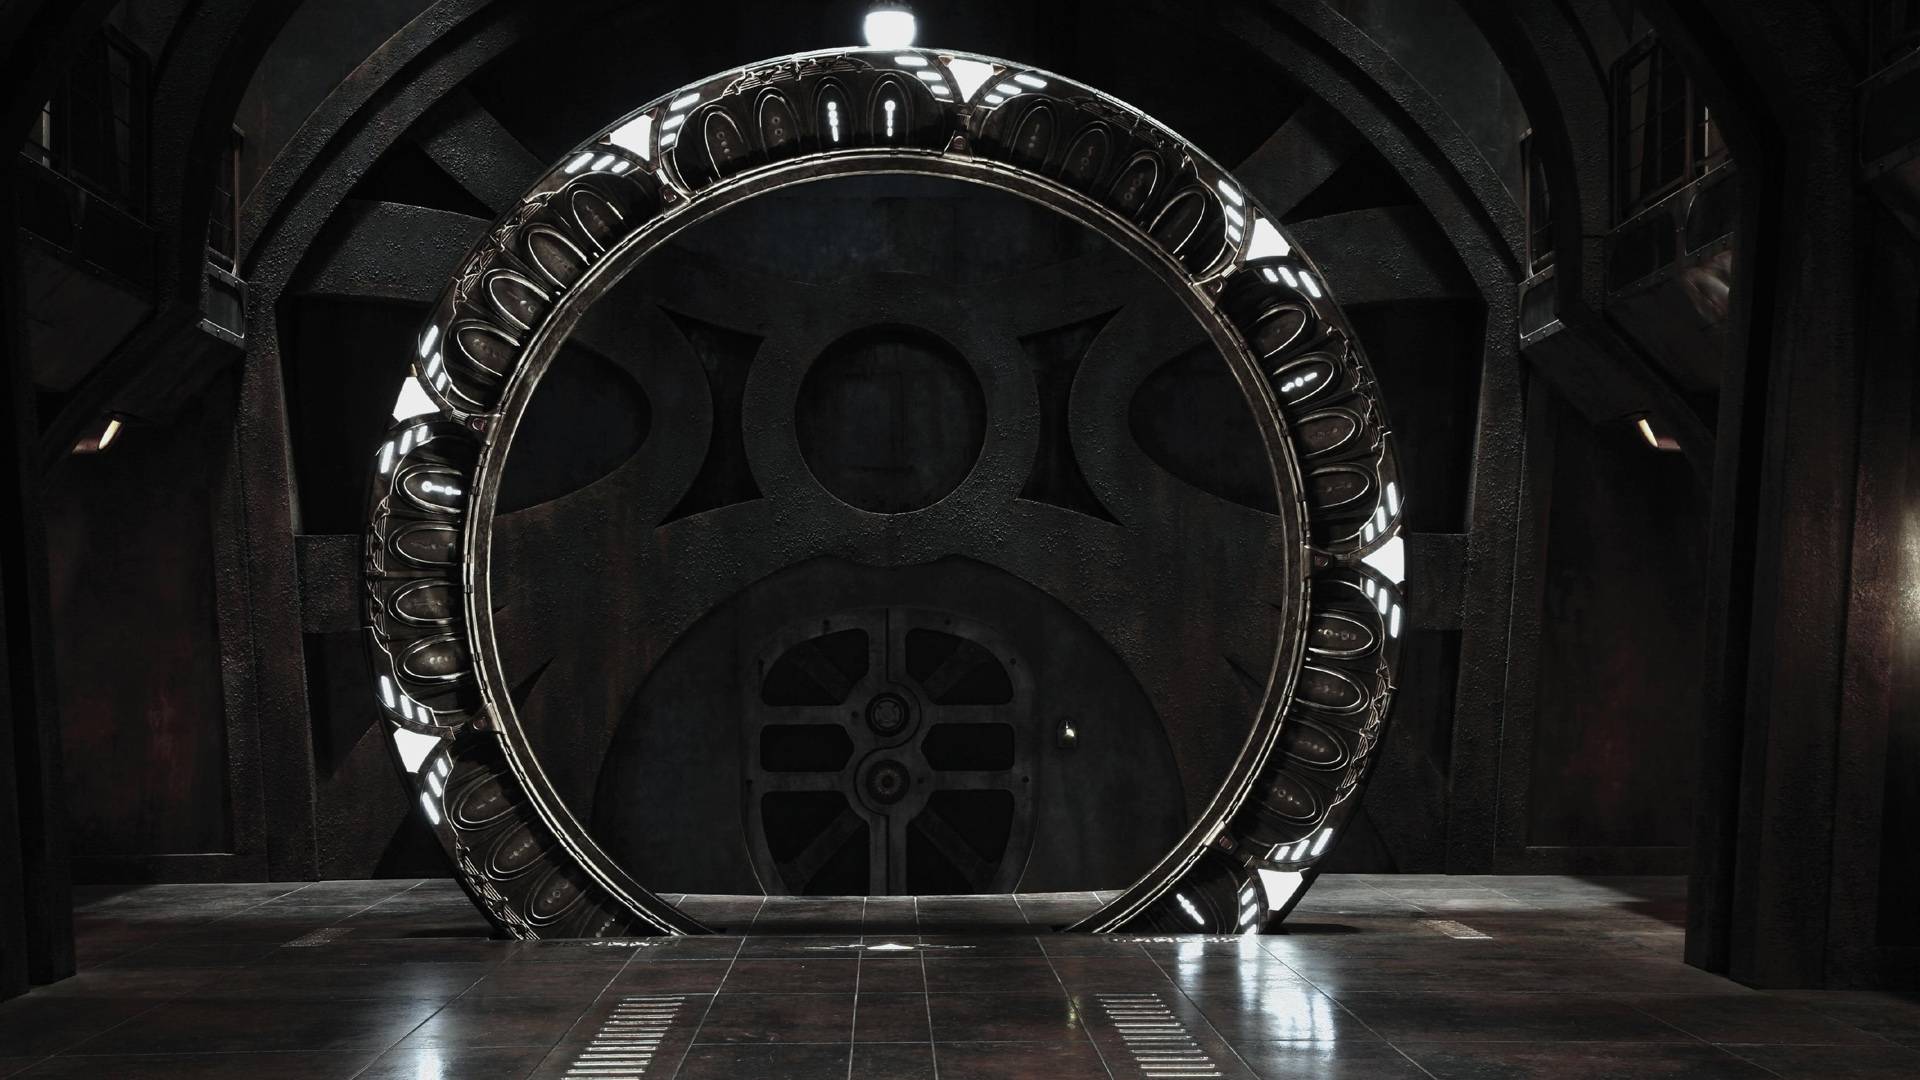 Stargate Universe Wallpaper